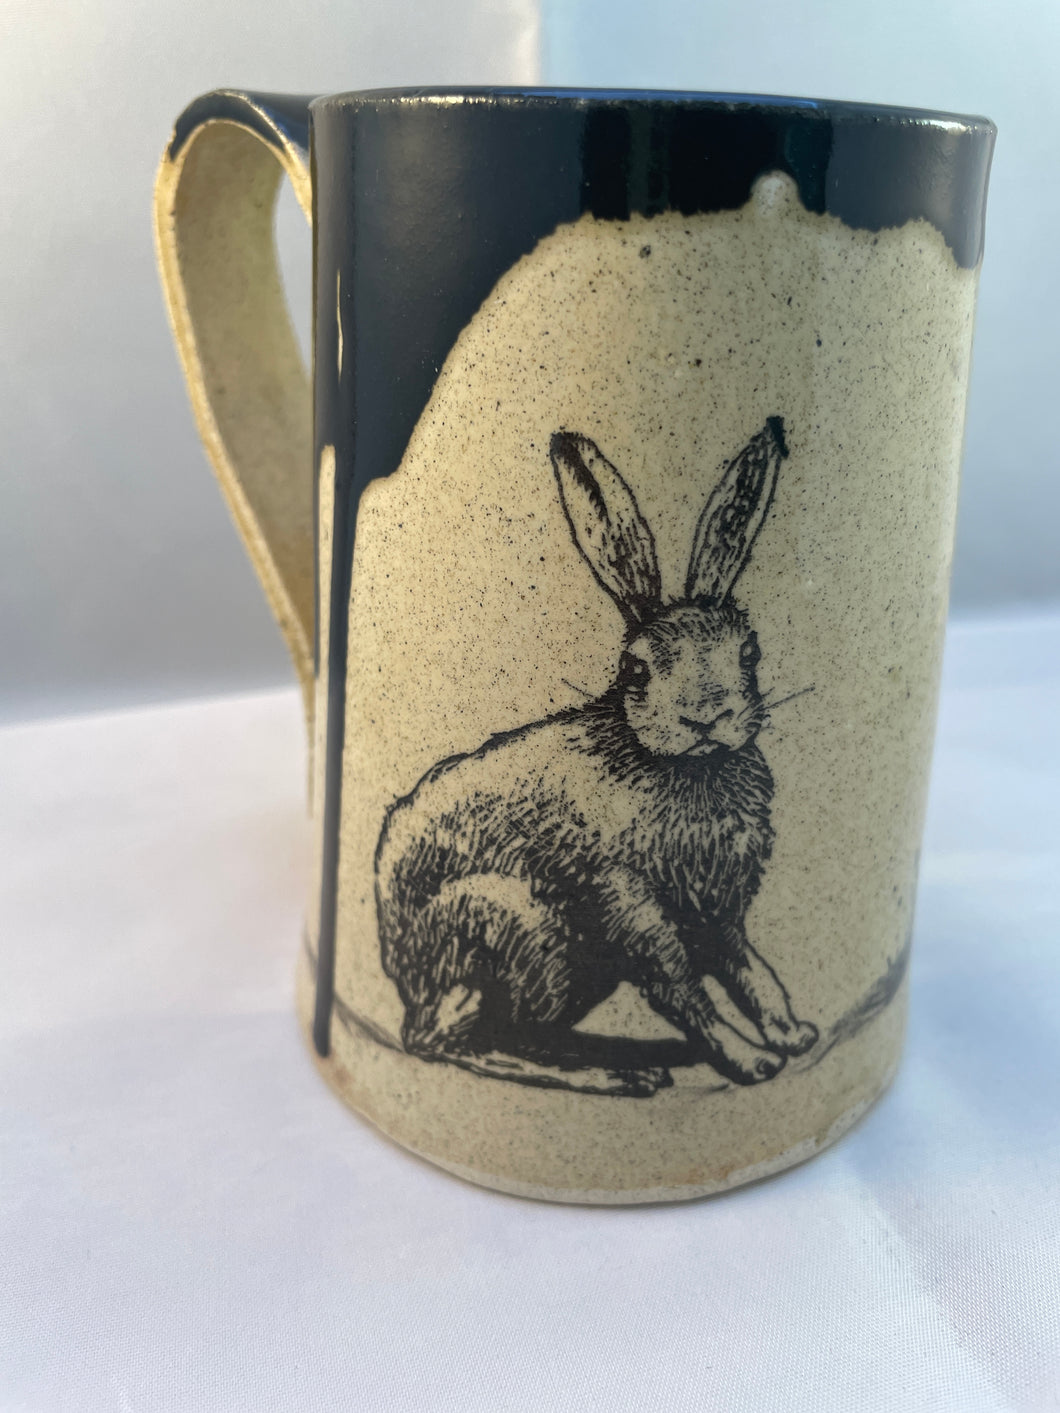 Rabbit, Butterfly, and Grain ArtPrize Mug - black